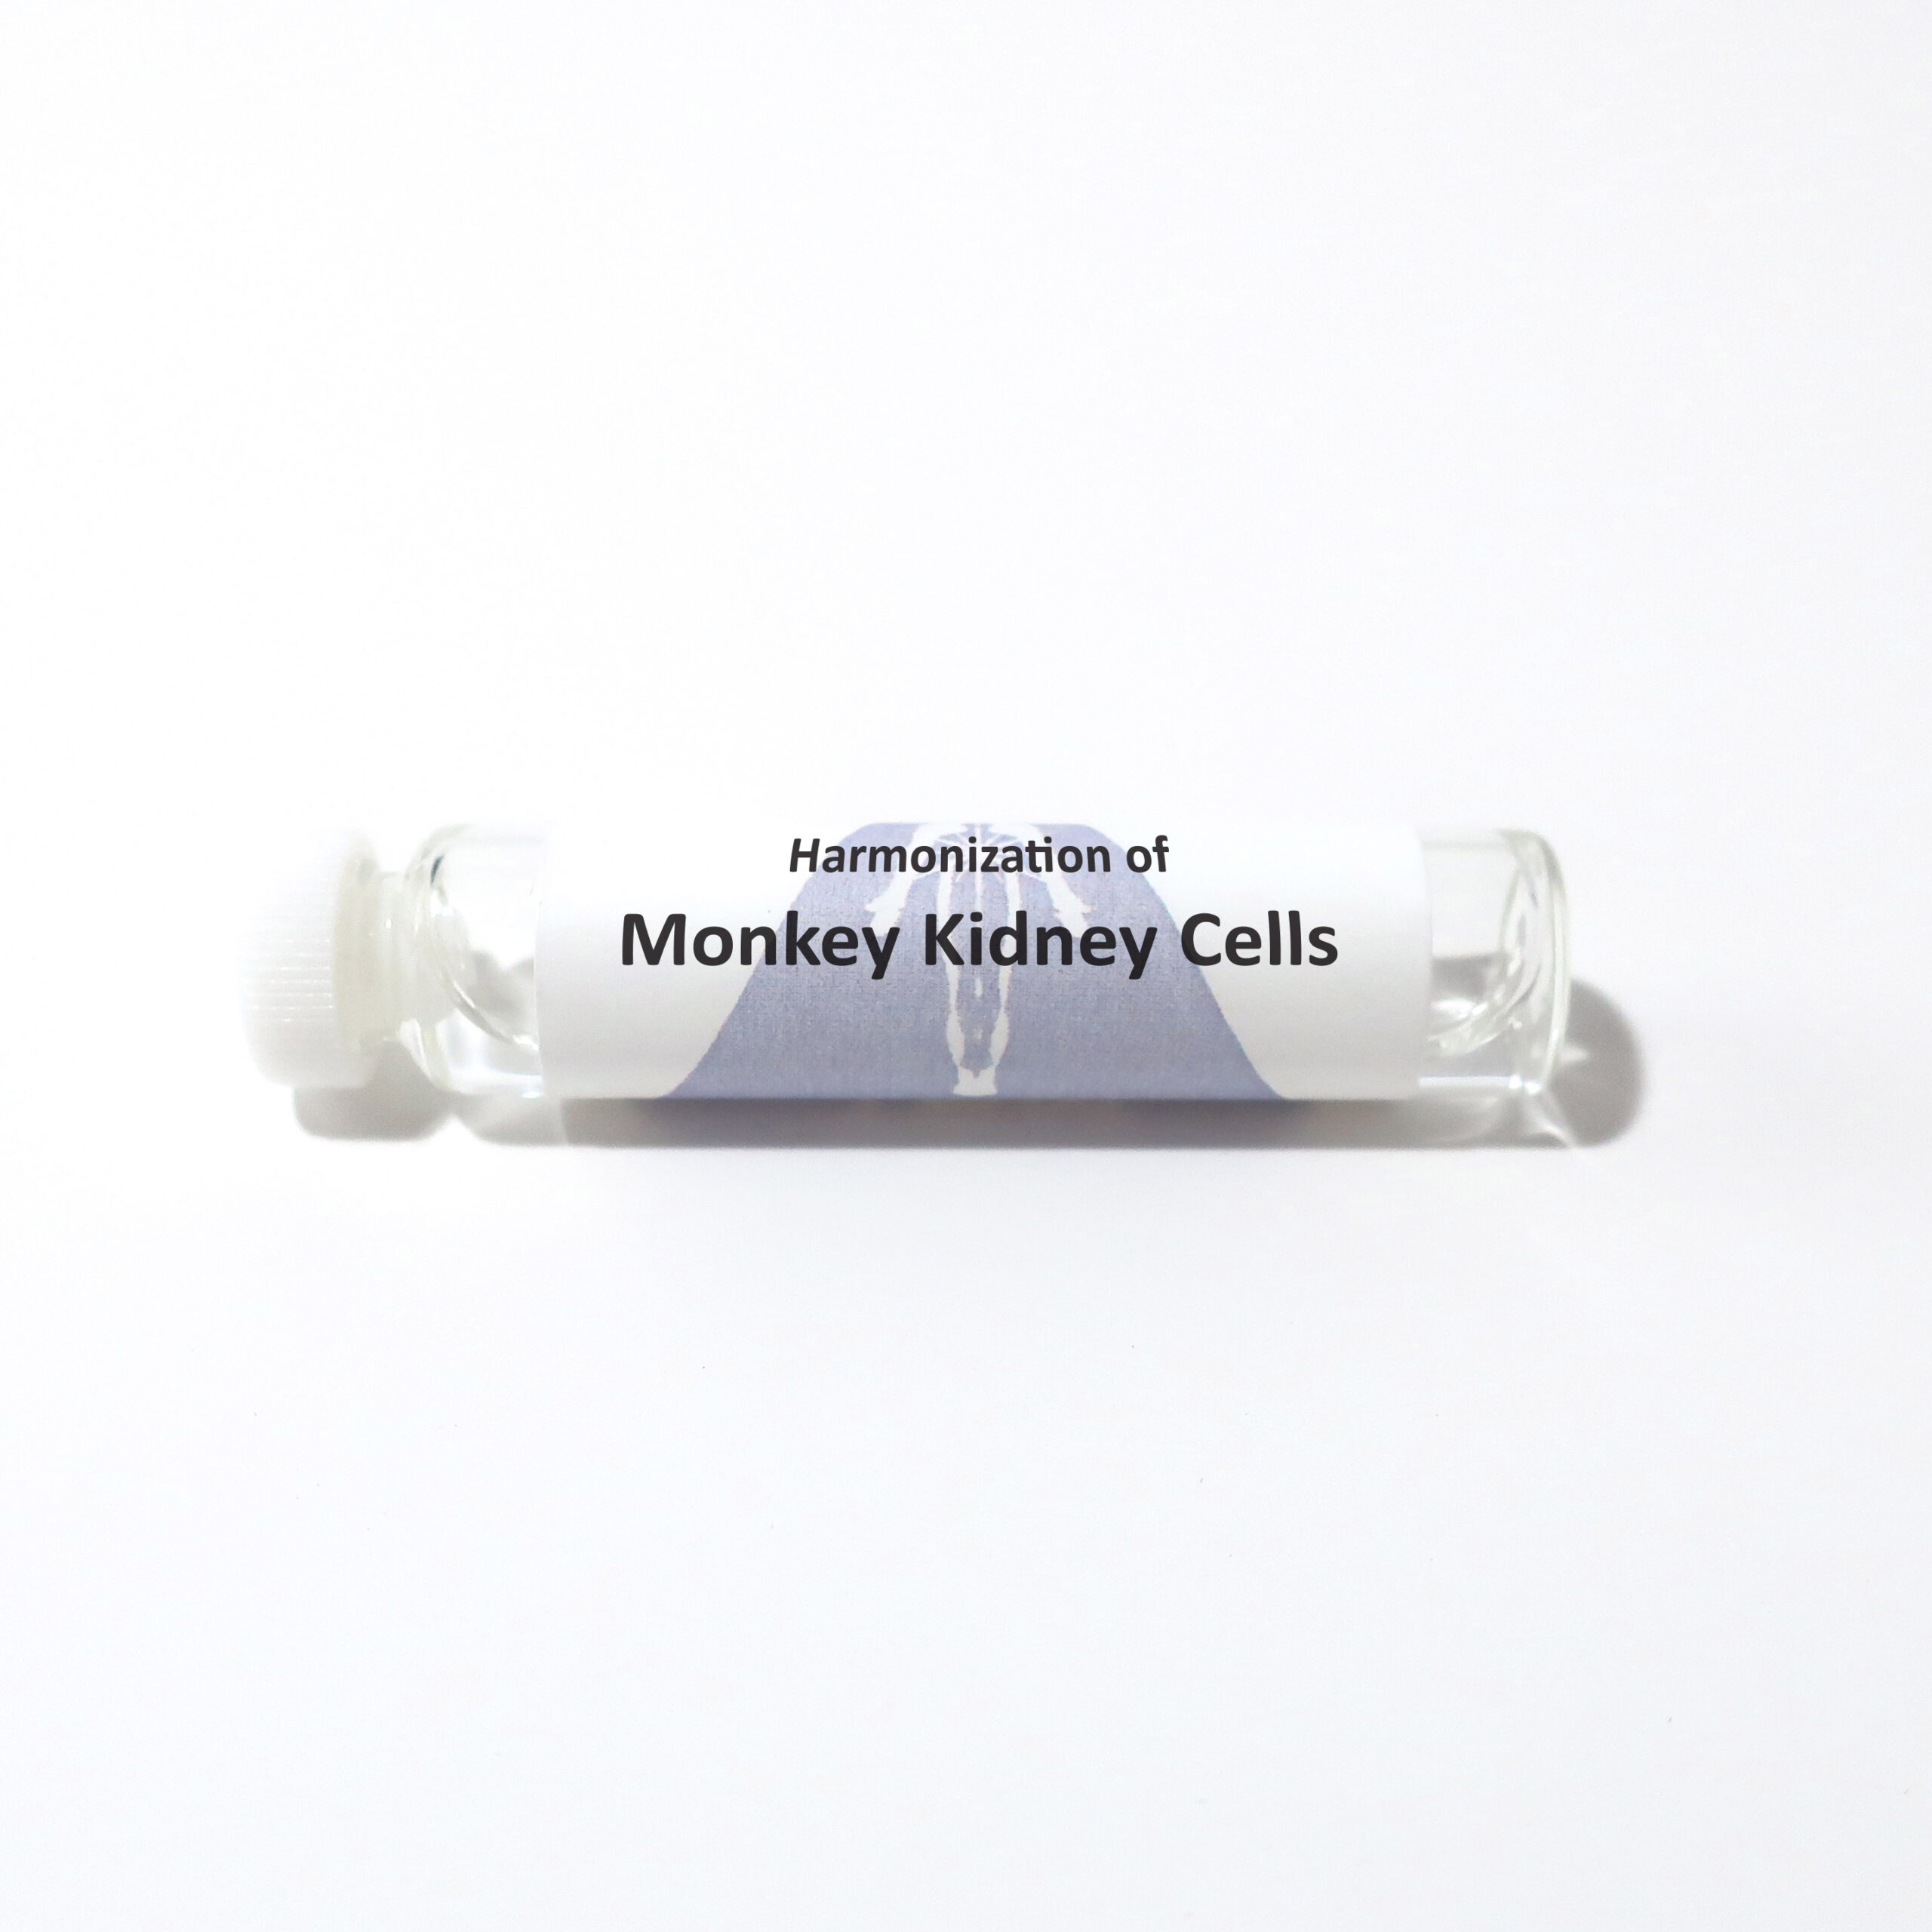 Monkey Kidney Cells